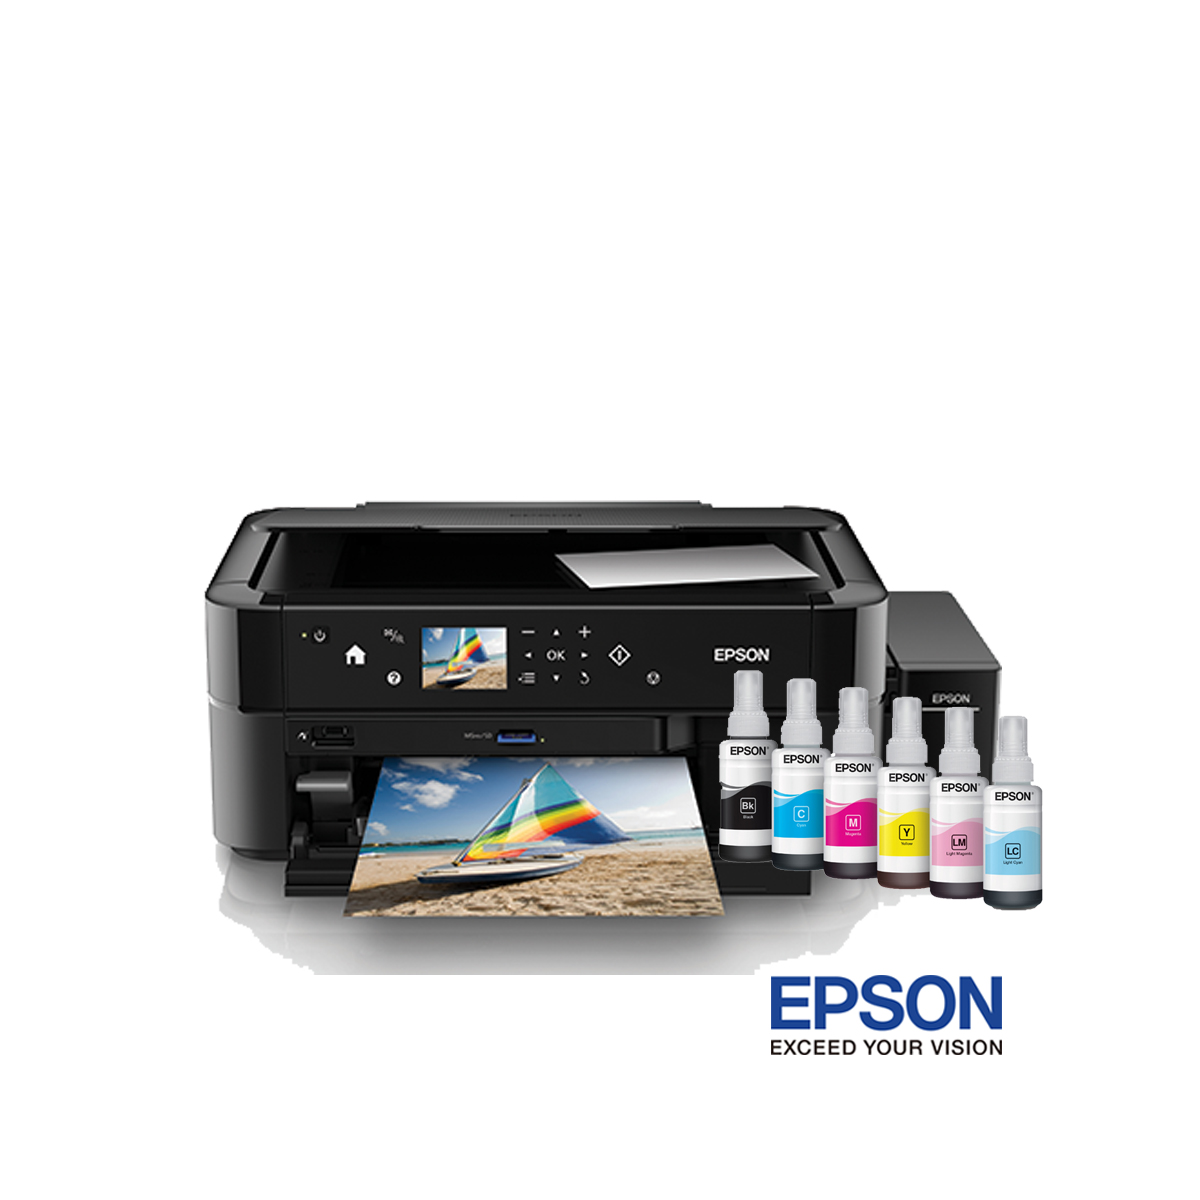 Jual Photo Printer Epson L850 Print Scan Copy Ink tank di Denpasar Bali